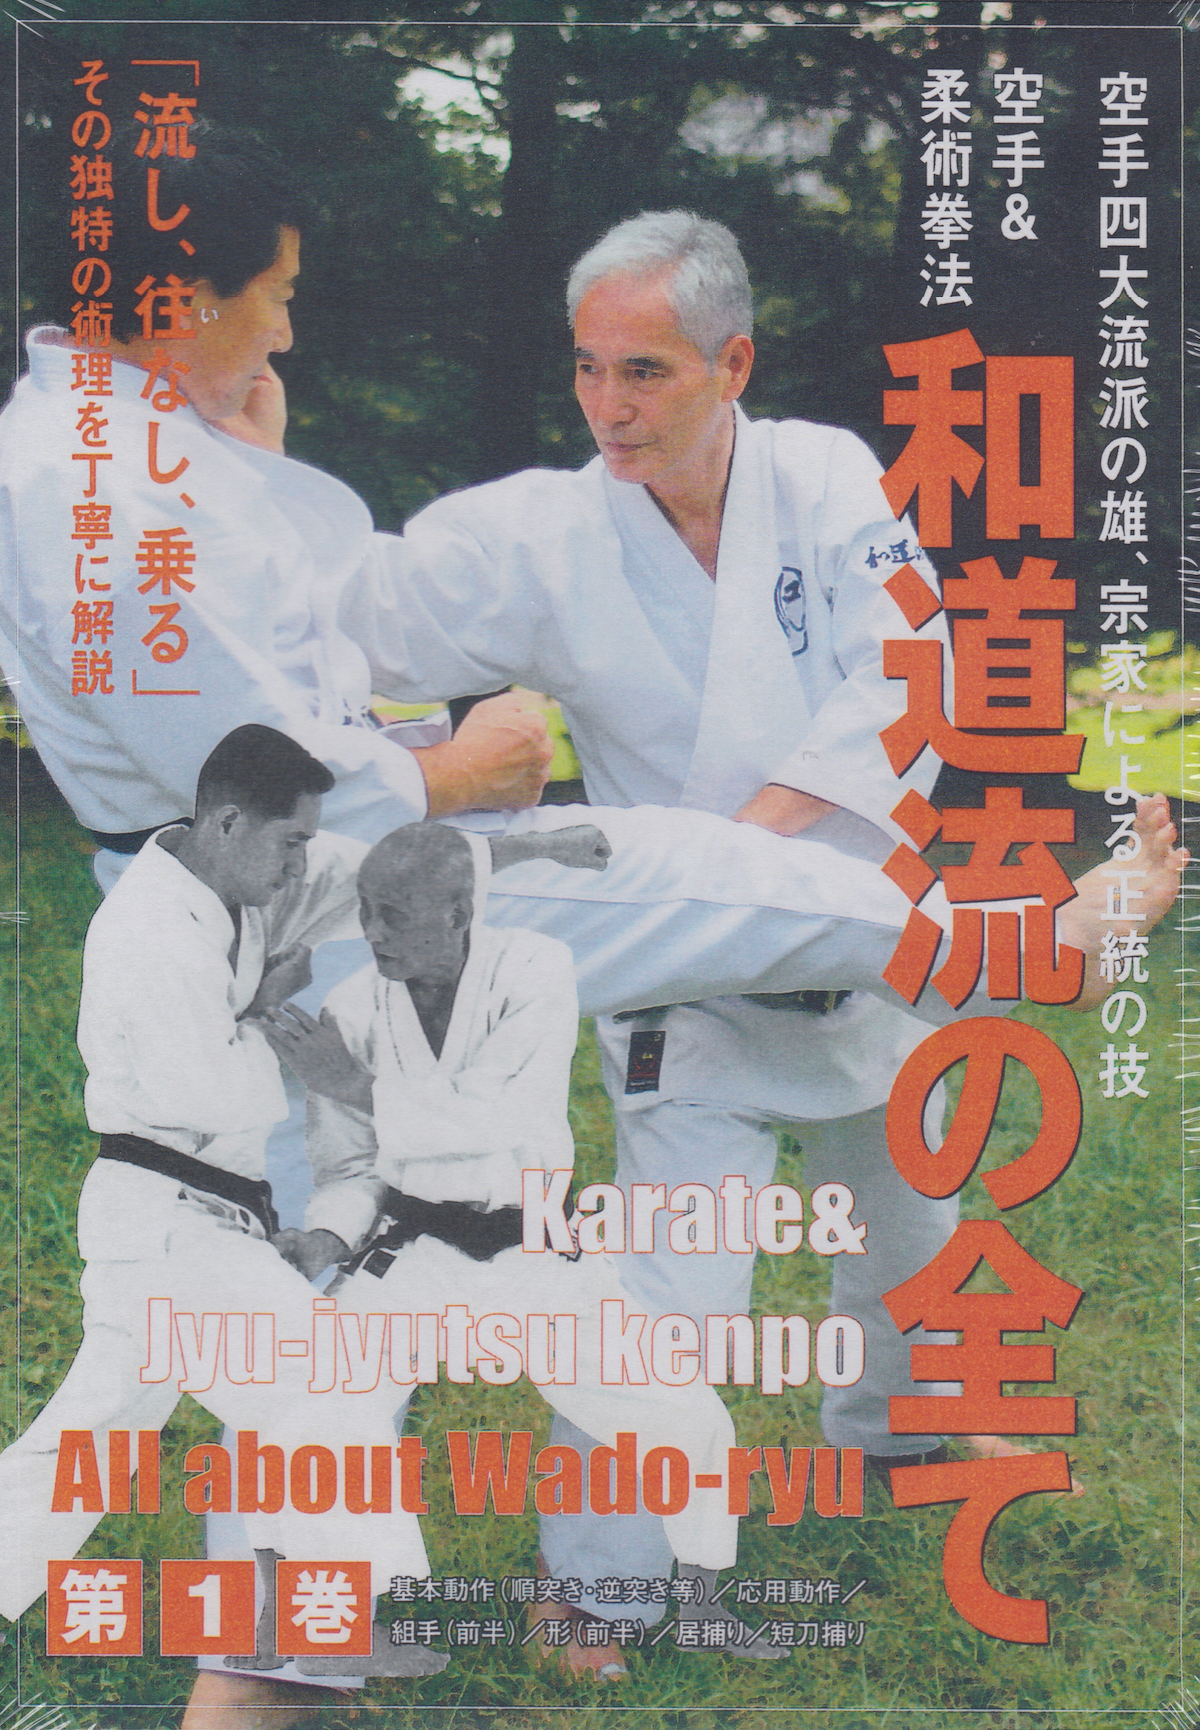 オール和道流 DVD 1: 空手と柔術拳法 by 大塚次郎